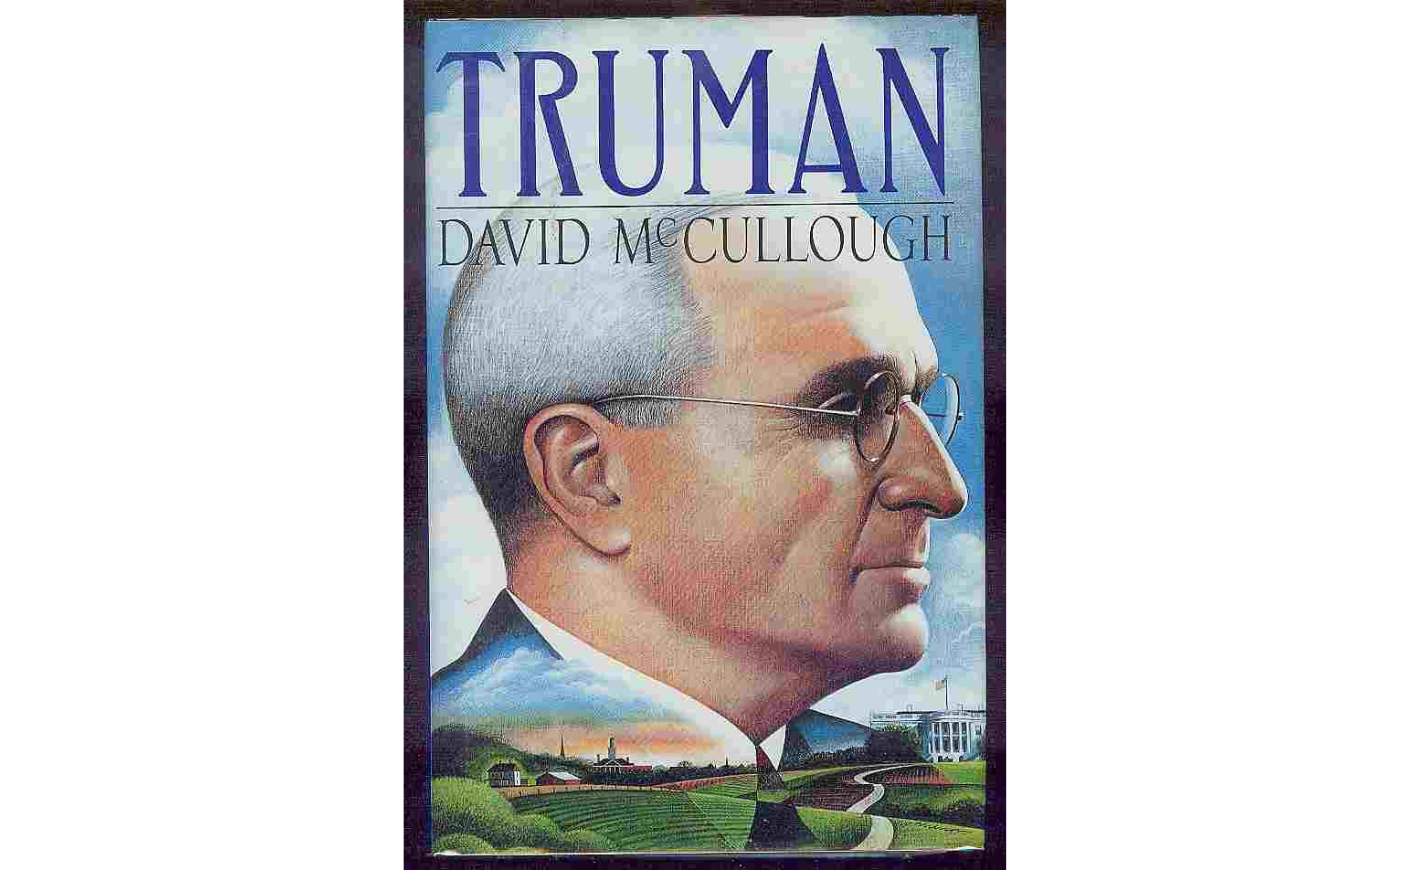 'Truman' by David McCullough